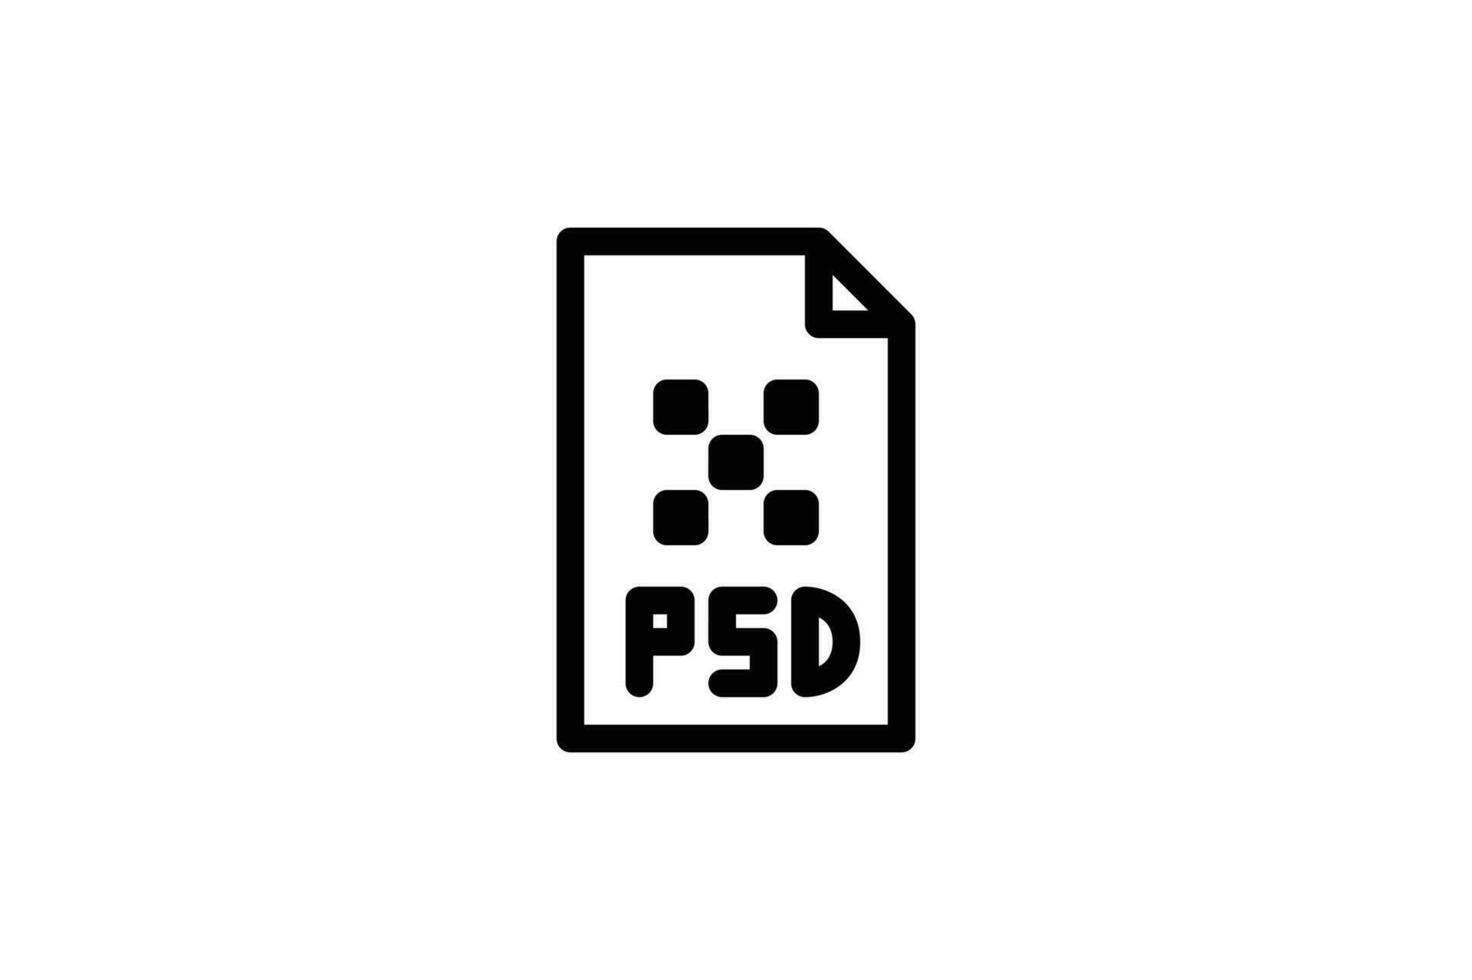 Psd file icon graphic design line style free vector